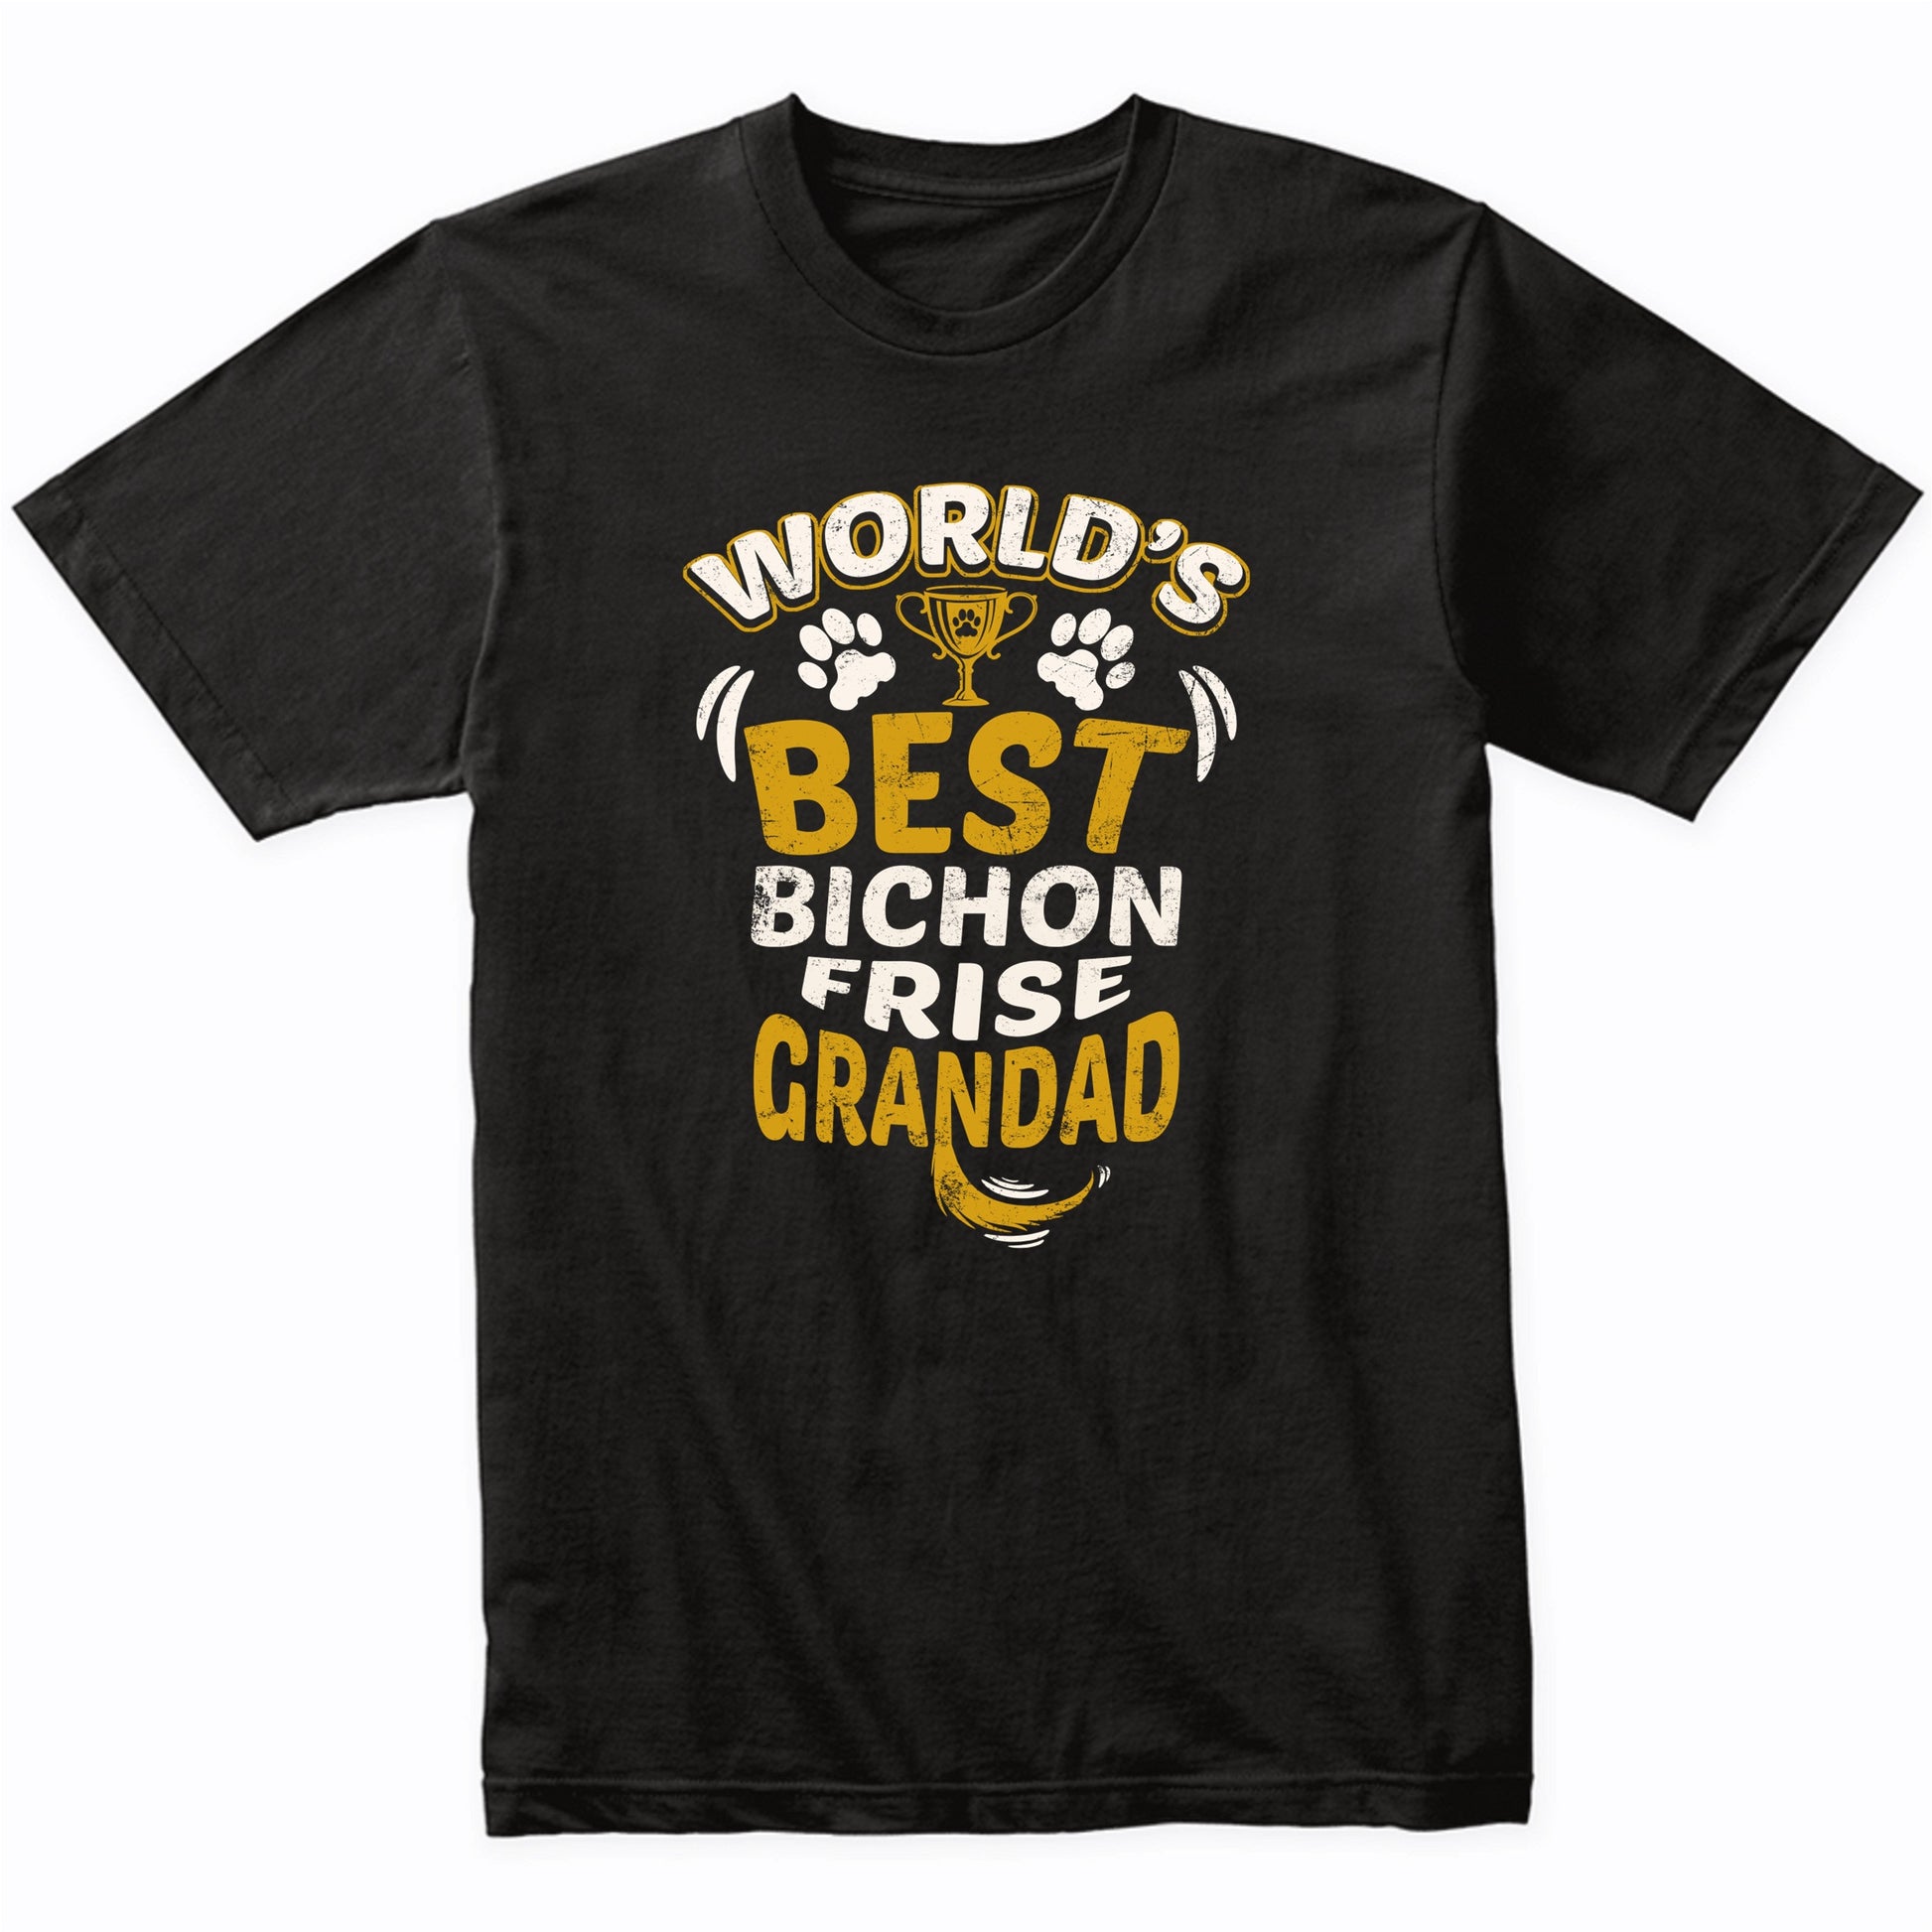 World's Best Bichon Frise Grandad Graphic T-Shirt